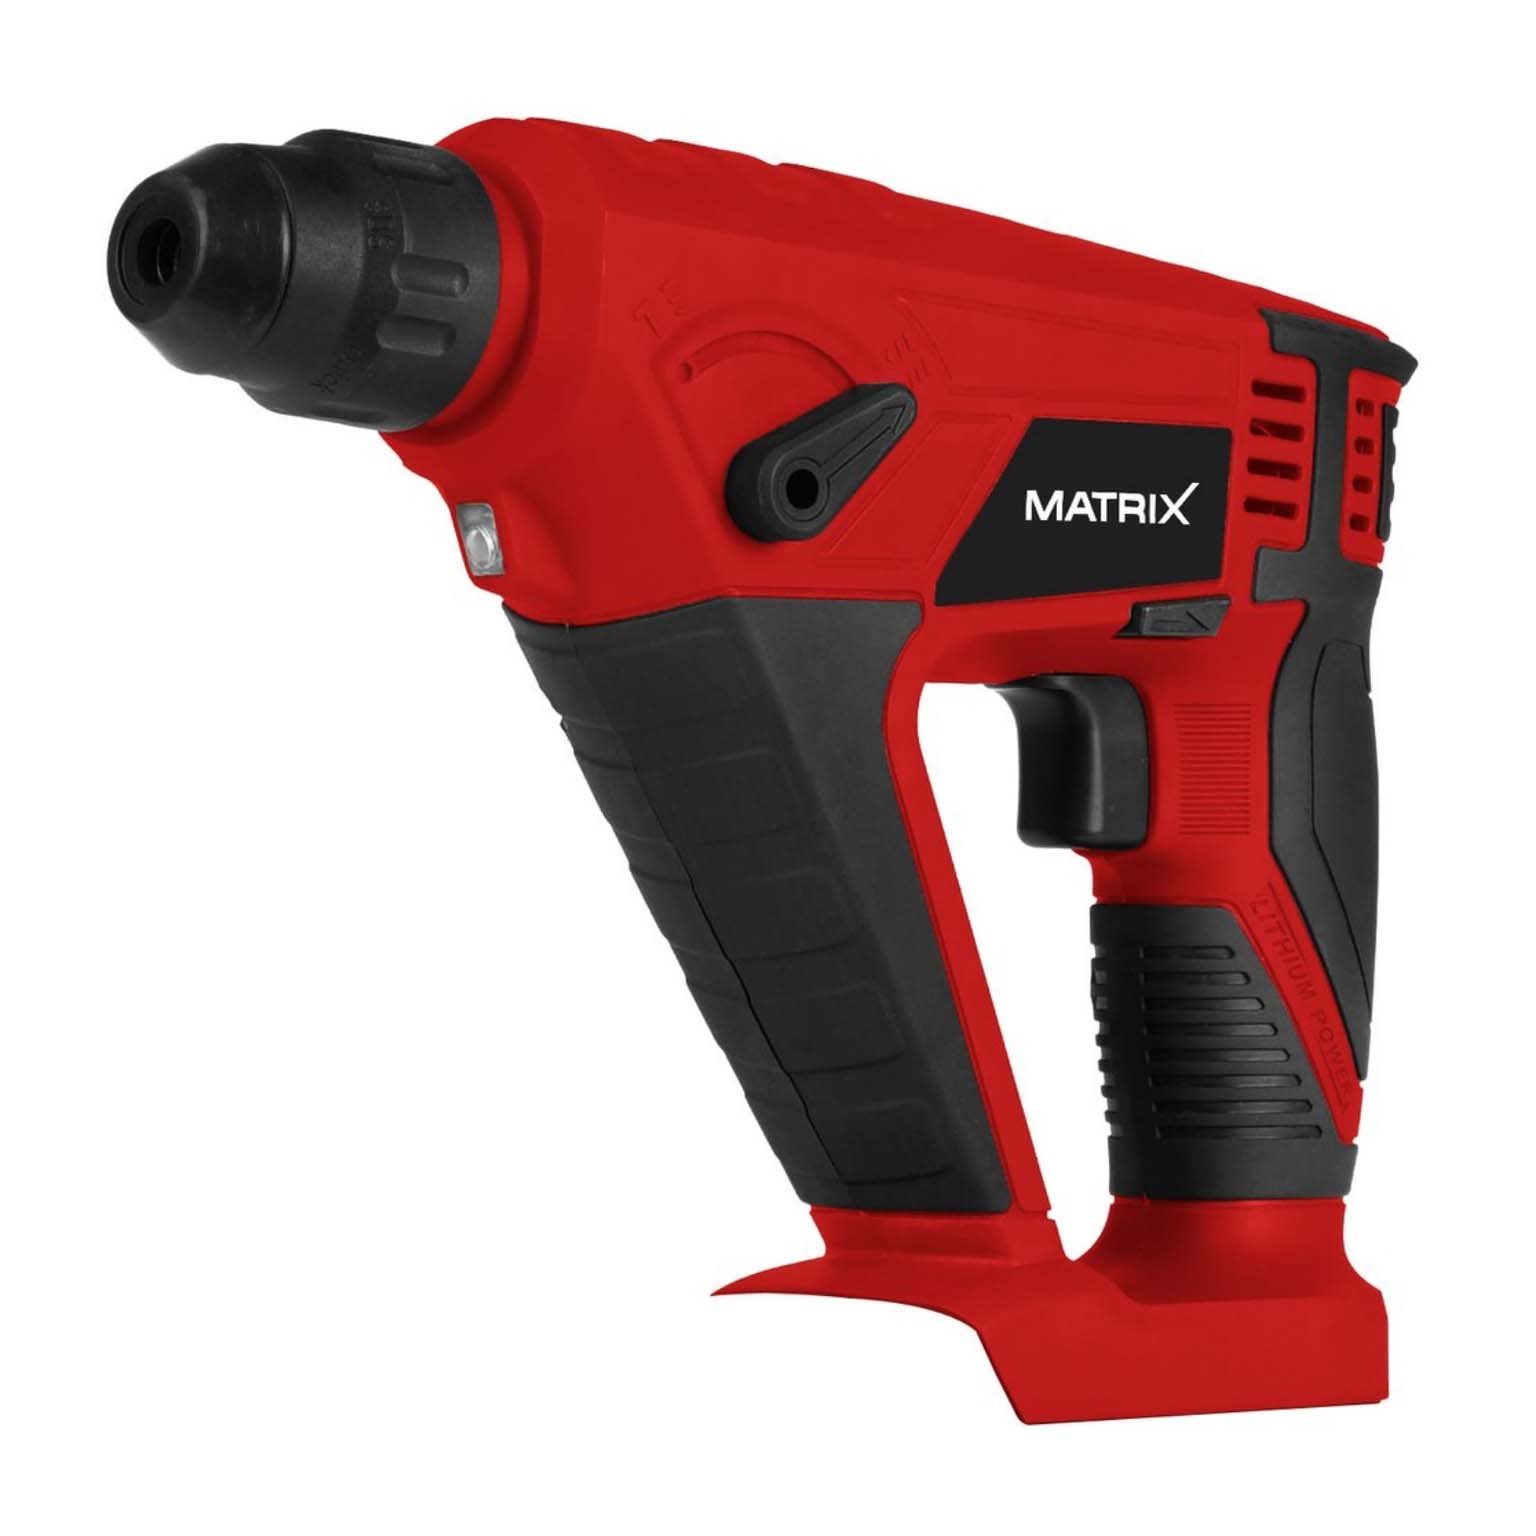 MATRIX 20V X-ONE Cordless Rotary Hammer Drill Skin Only	